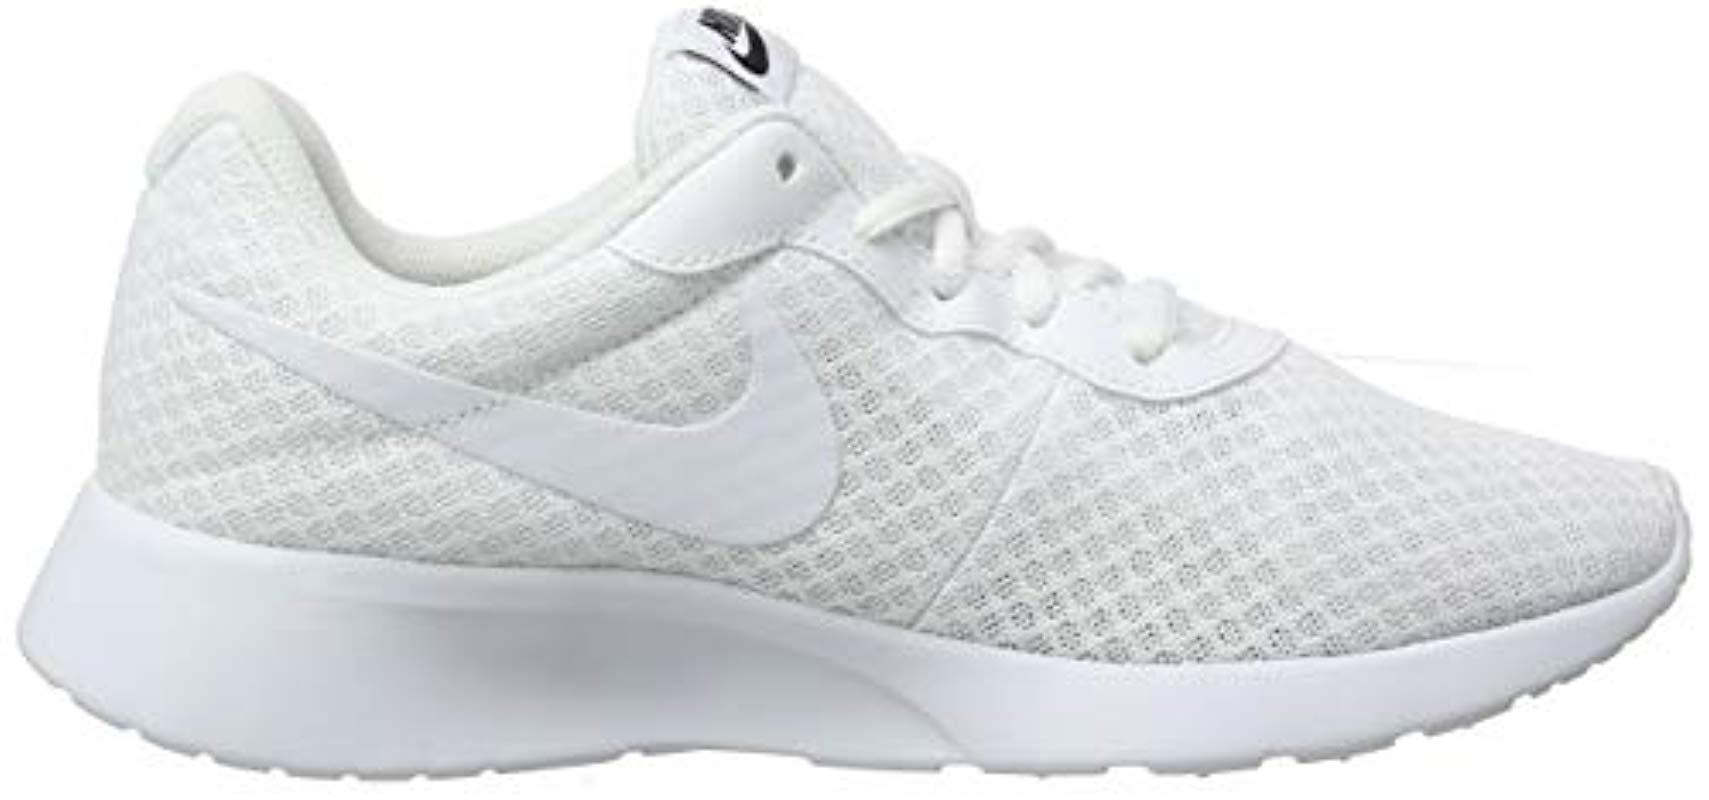 adidas Nike Tanjun Trainers, White (white/white Black 110), 3 Uk (36 Eu) -  Lyst